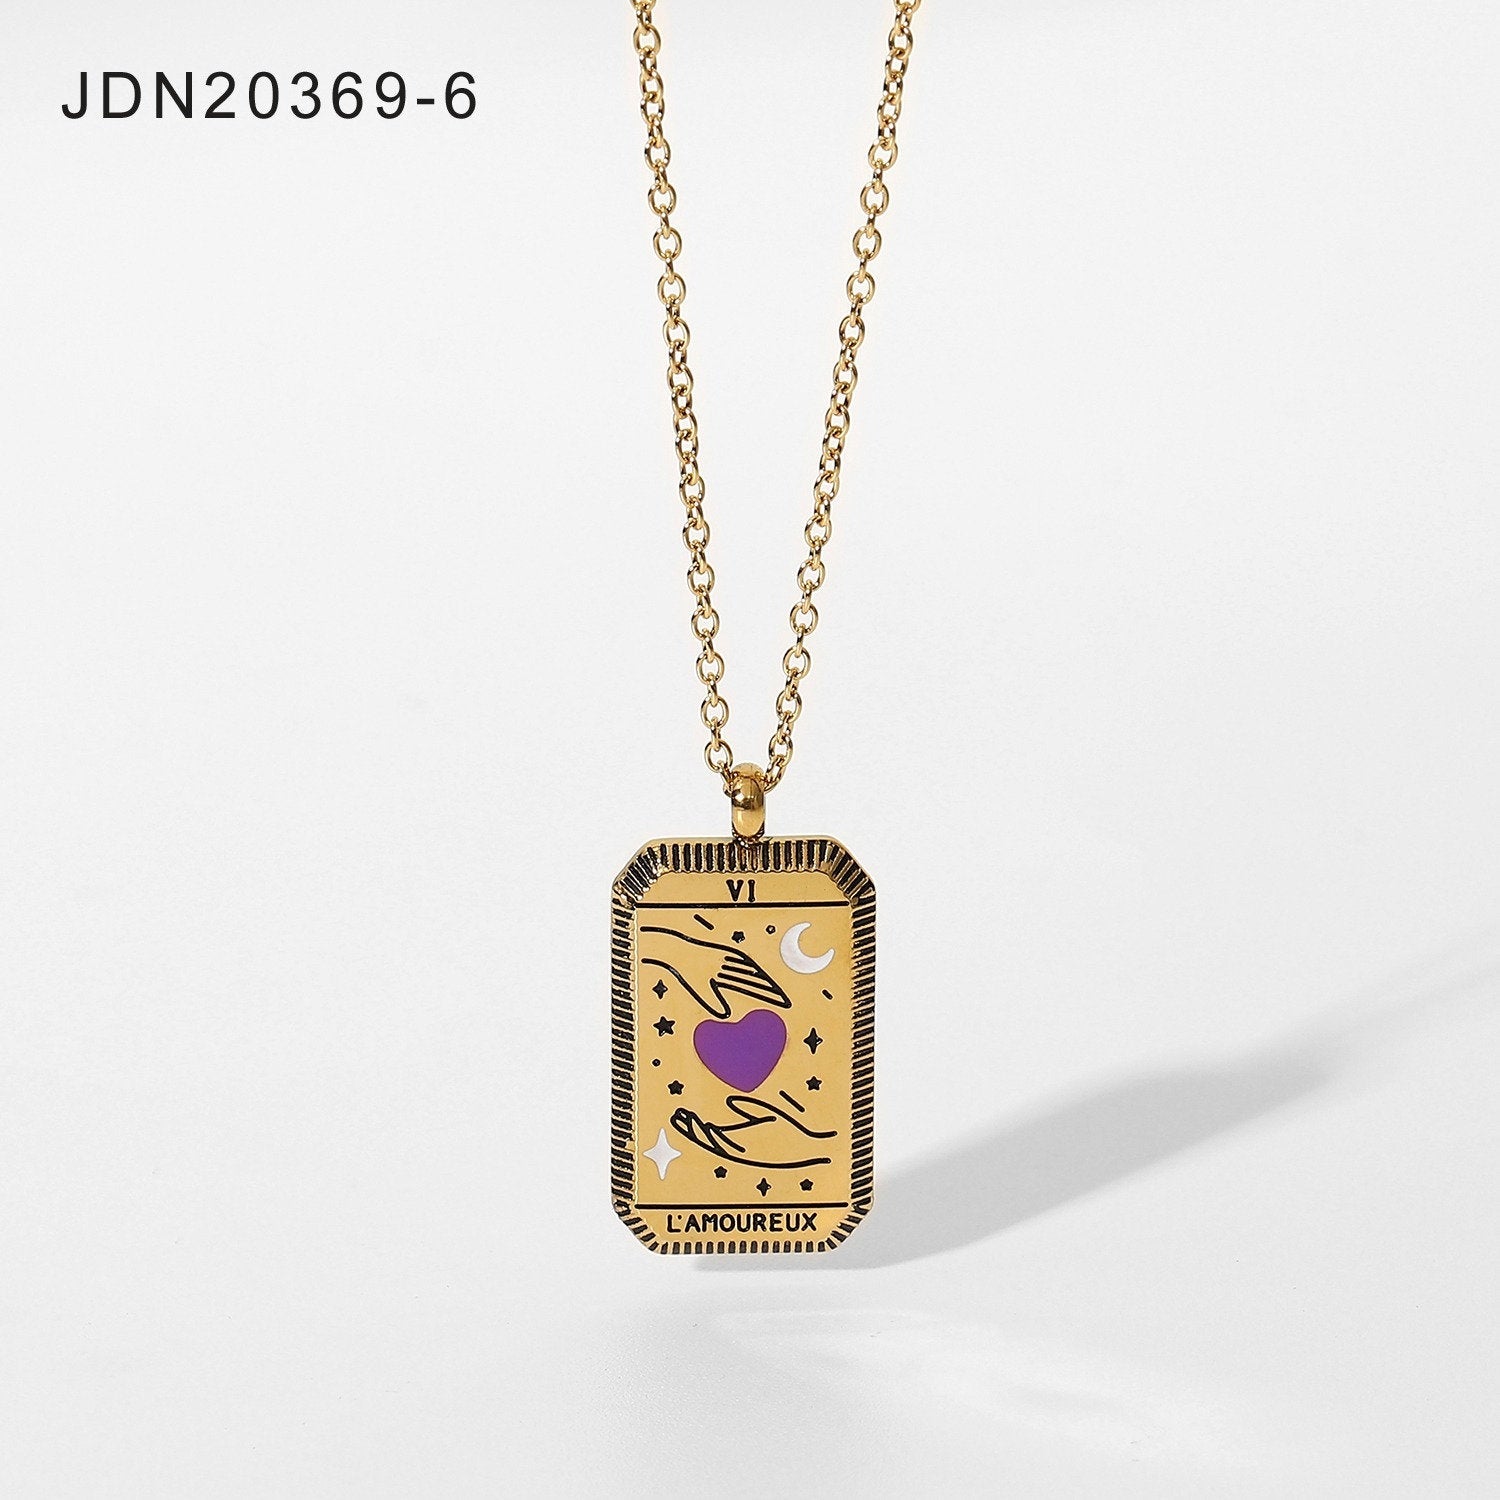 Tarot Card Necklace - 18k Gold Waterproof Rectangle Necklace - Celestial Mystic Tarot Jewelry, Queen Necklace, Sun Necklace, Moon Necklace